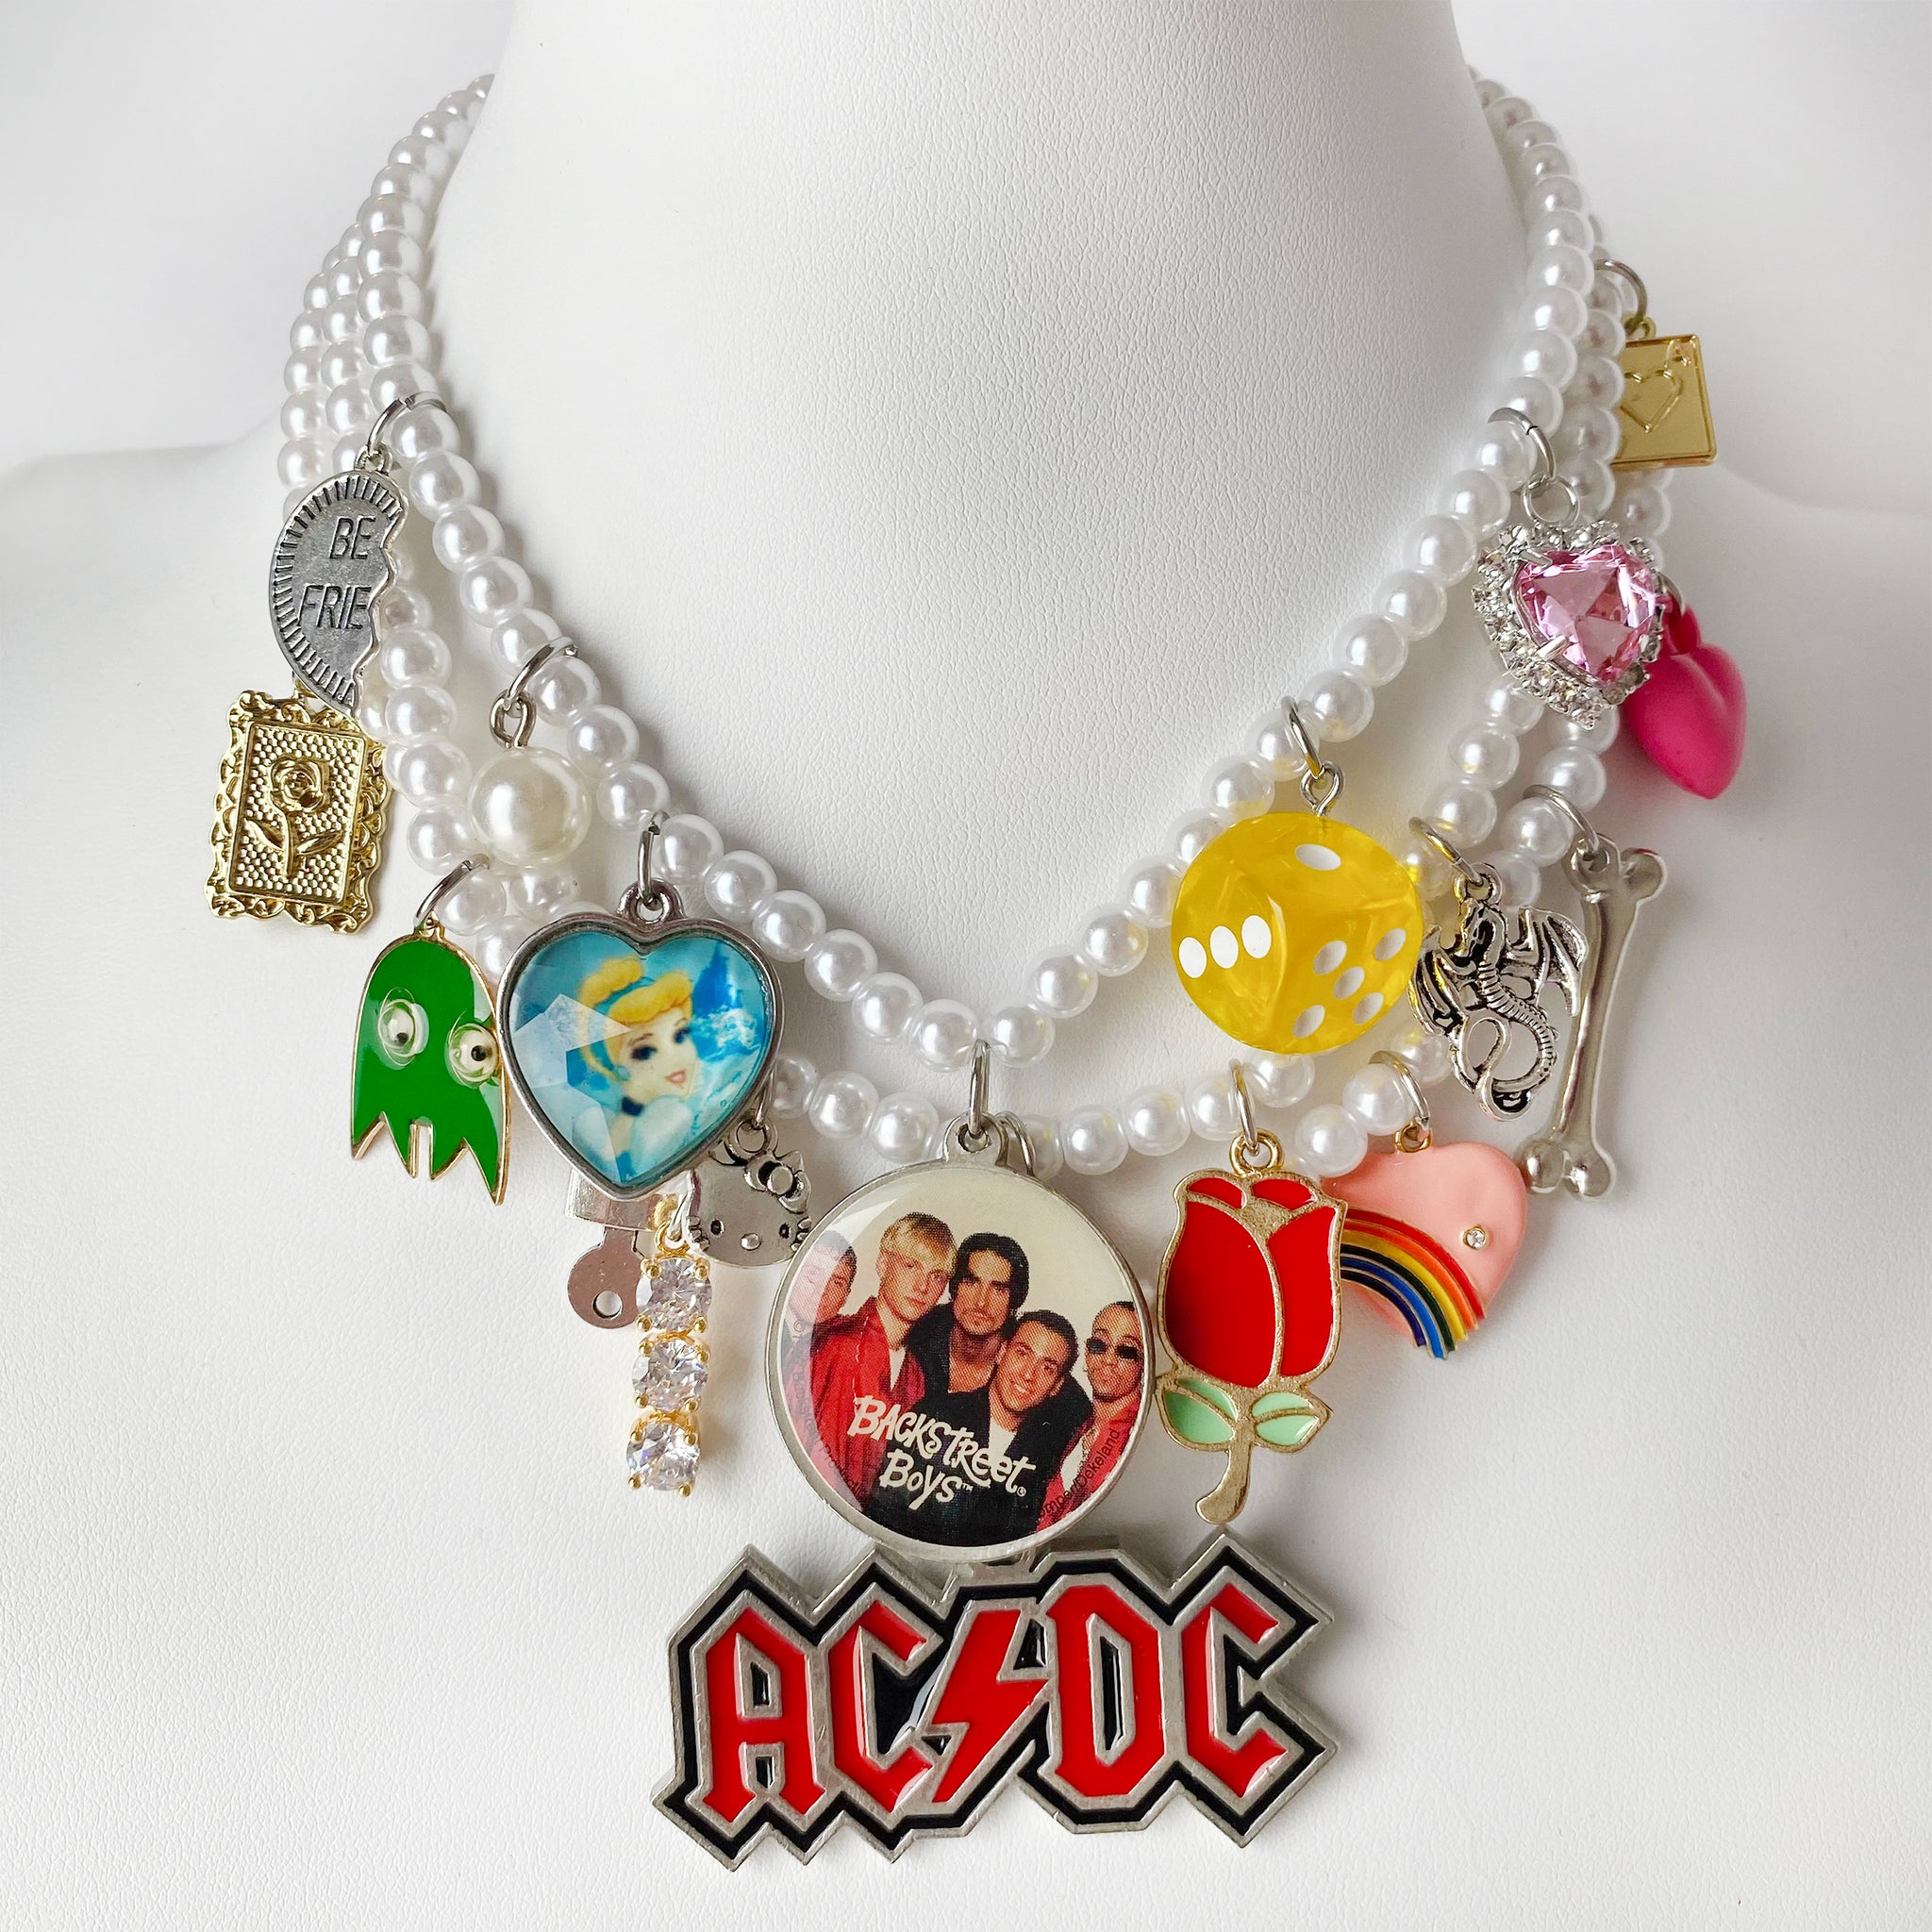 ACDC/Backstreet Boys Vintage Remix Charm Necklace